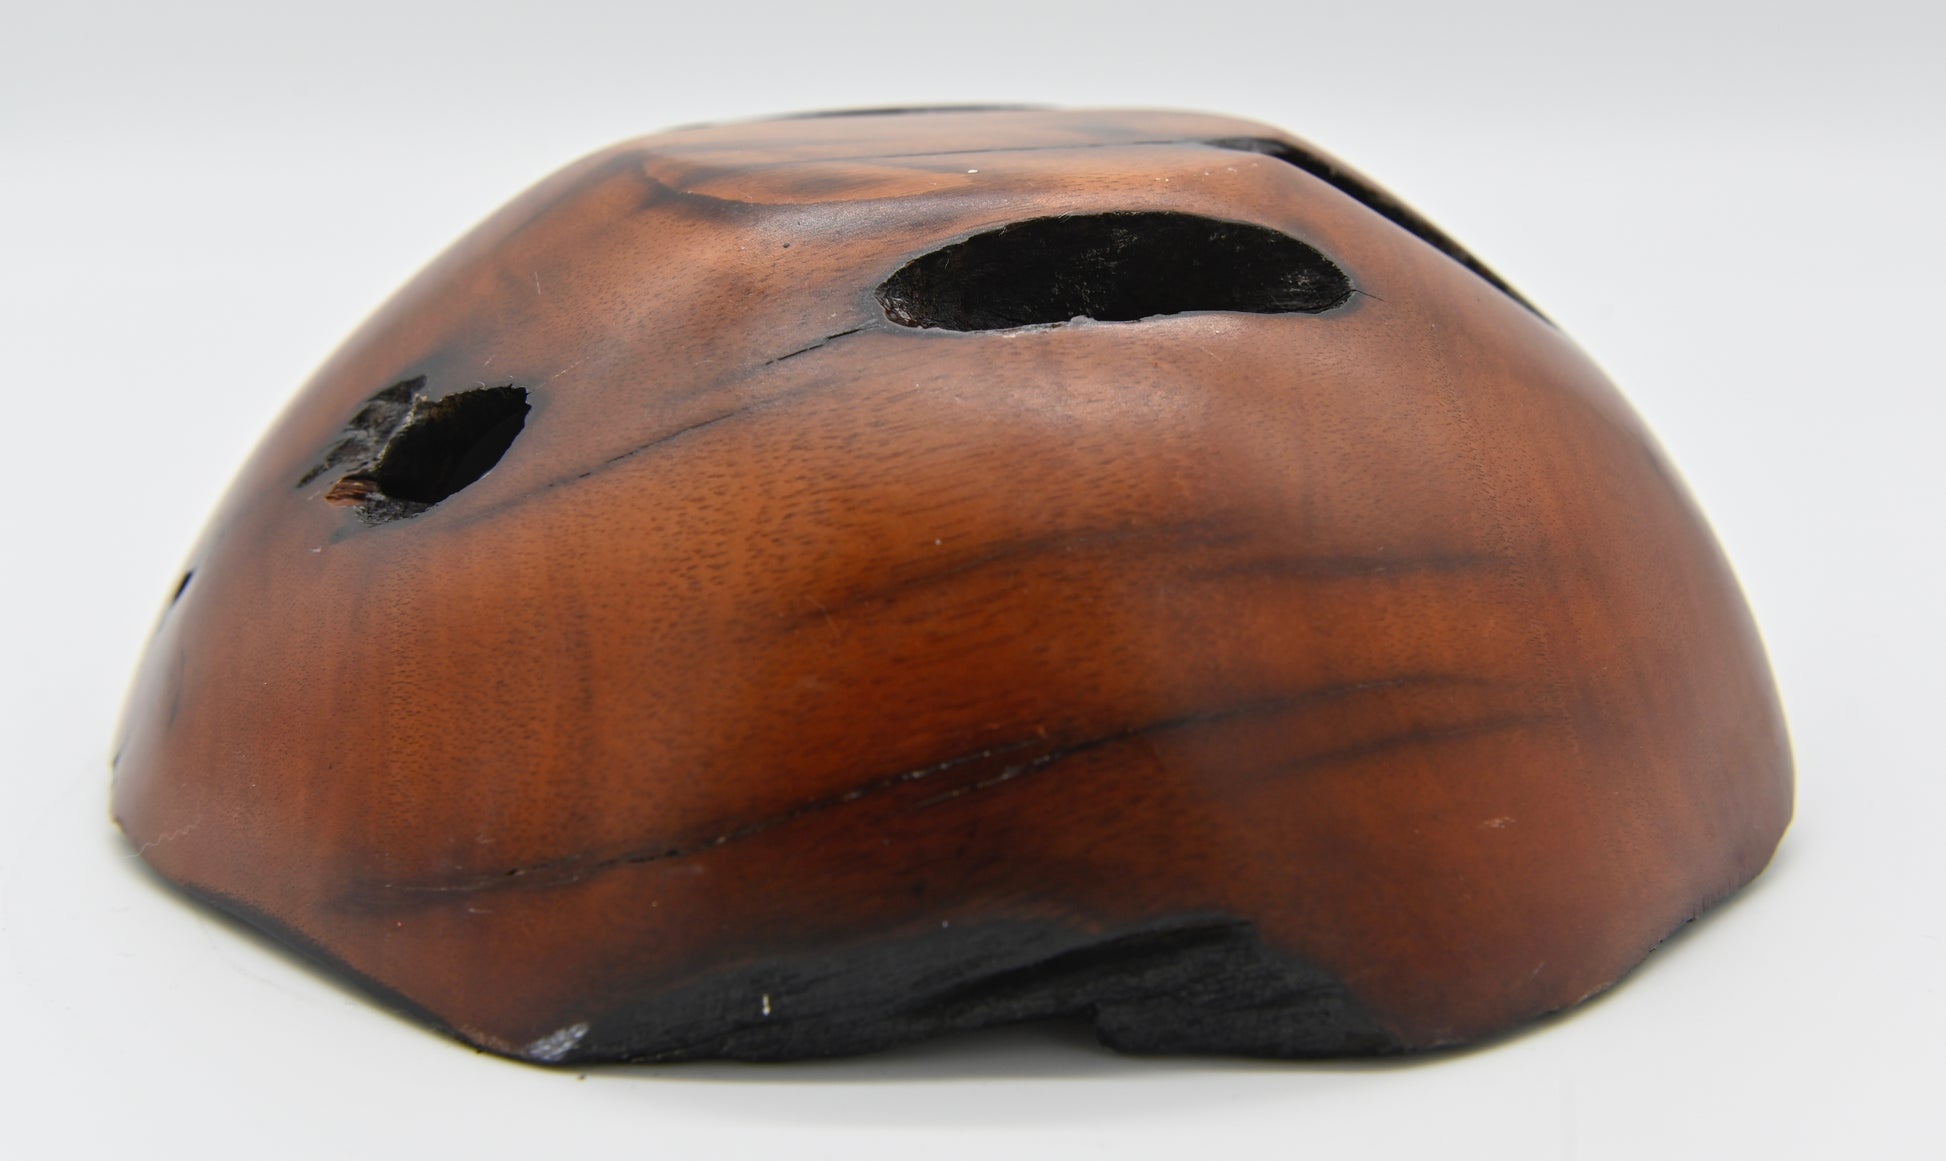 A Stunning Piece of Art  Rich Dark Cherry Burl Wood Bowl  Natural Edge Burls  Knots Bark Inclusions Holes Cracks